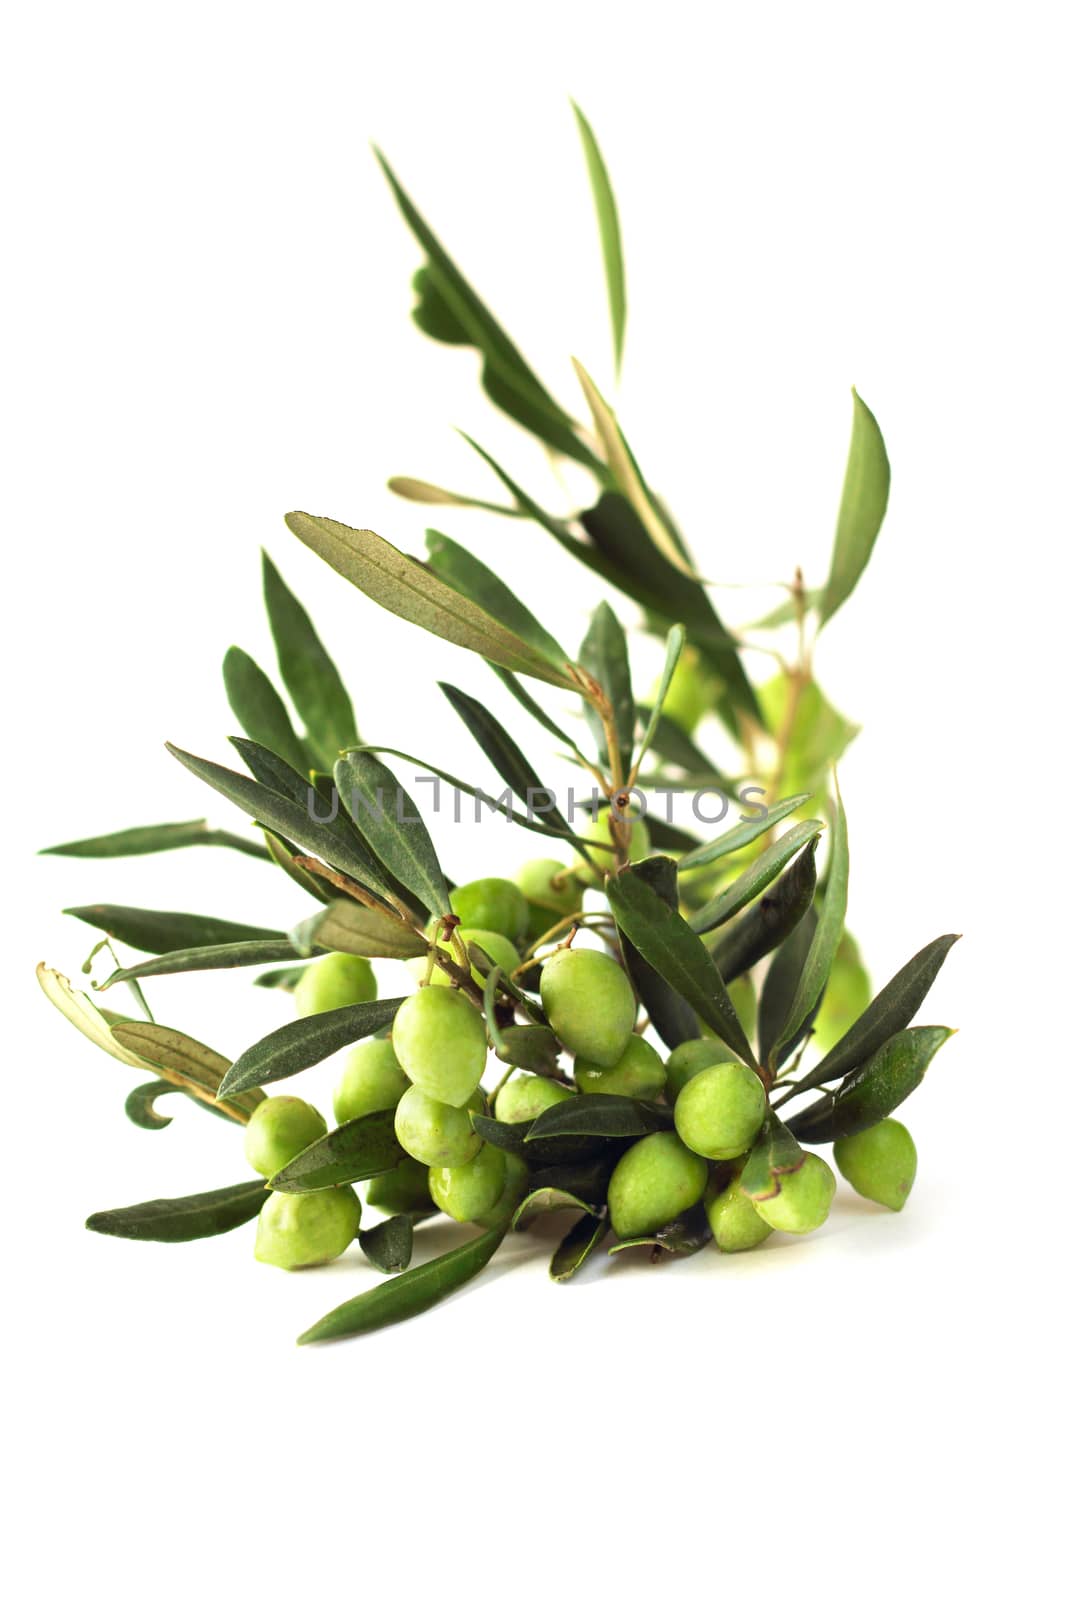 Olives on branch by destillat